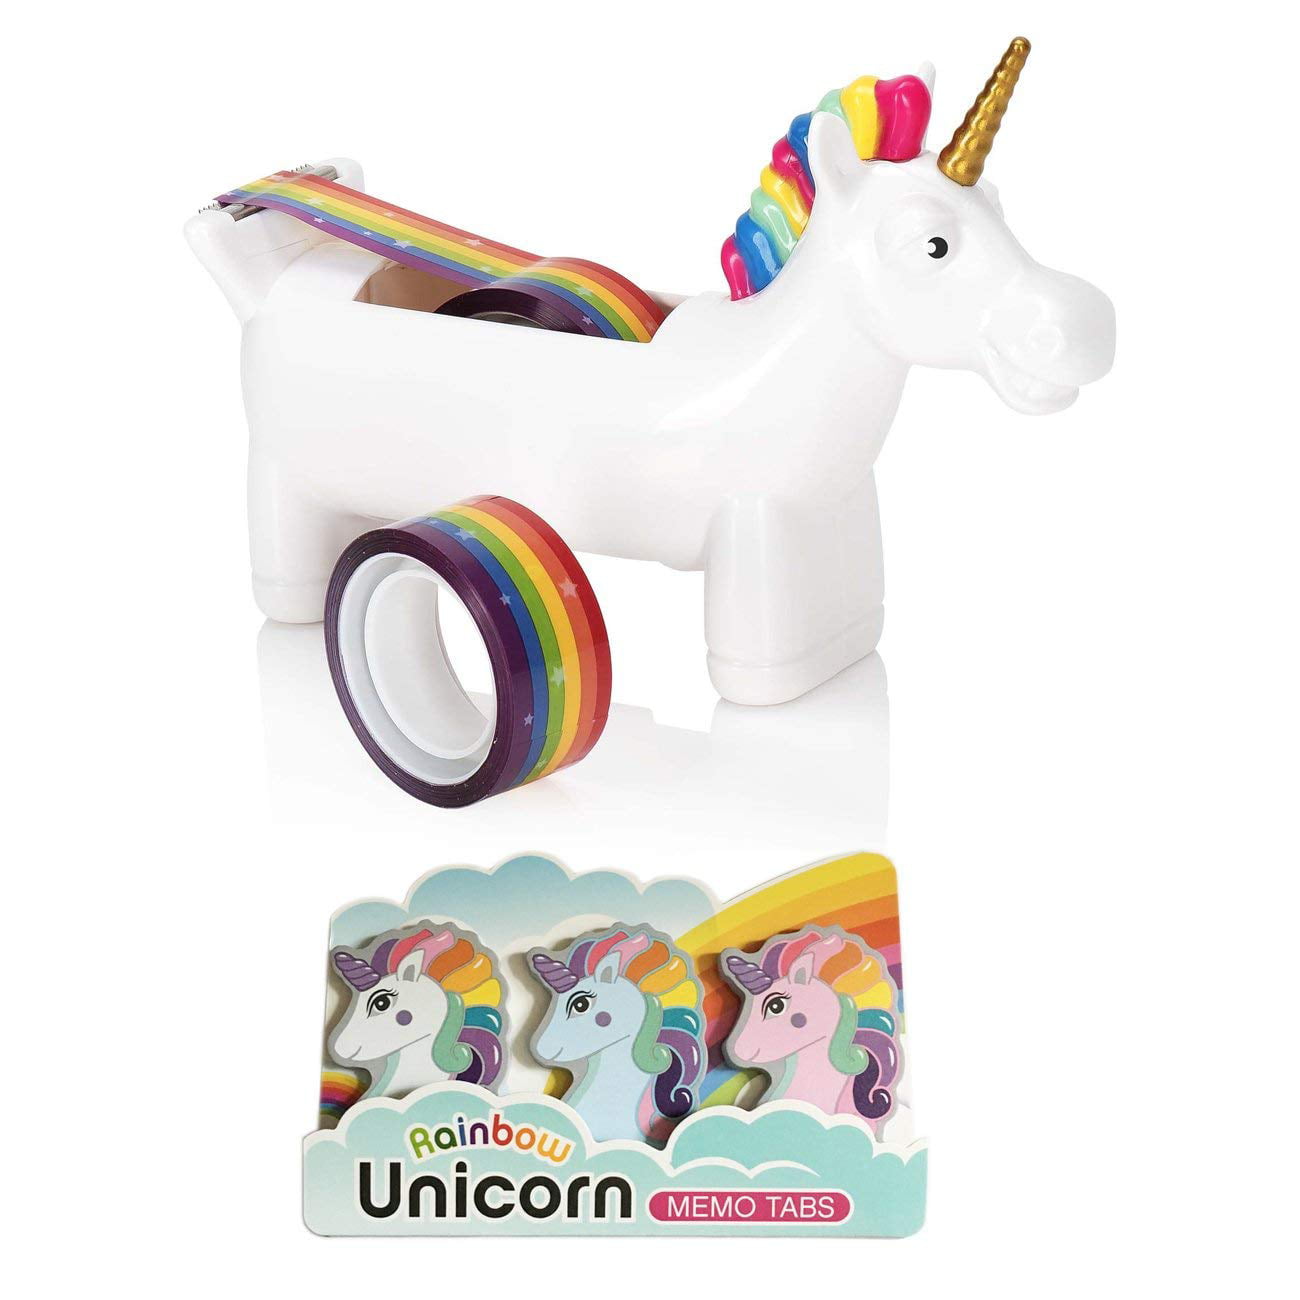 Unicorn Tape Dispenser With X Rolls Of Rainbow Tape With Rainbow Unicorn Memo Tabs Walmart